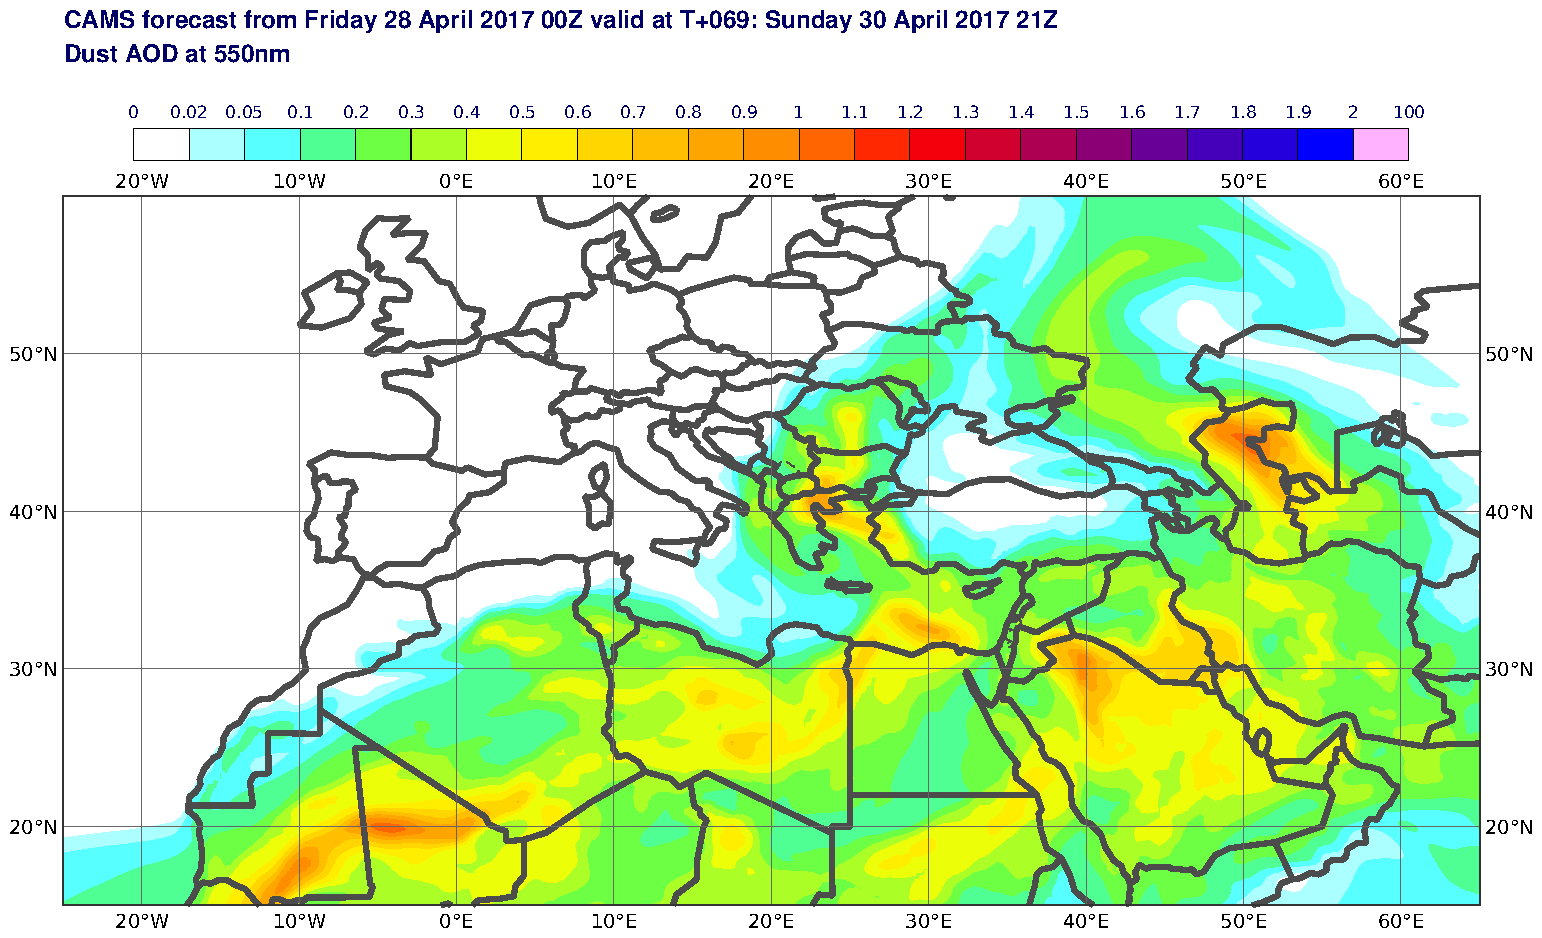 Dust AOD at 550nm valid at T69 - 2017-04-30 21:00